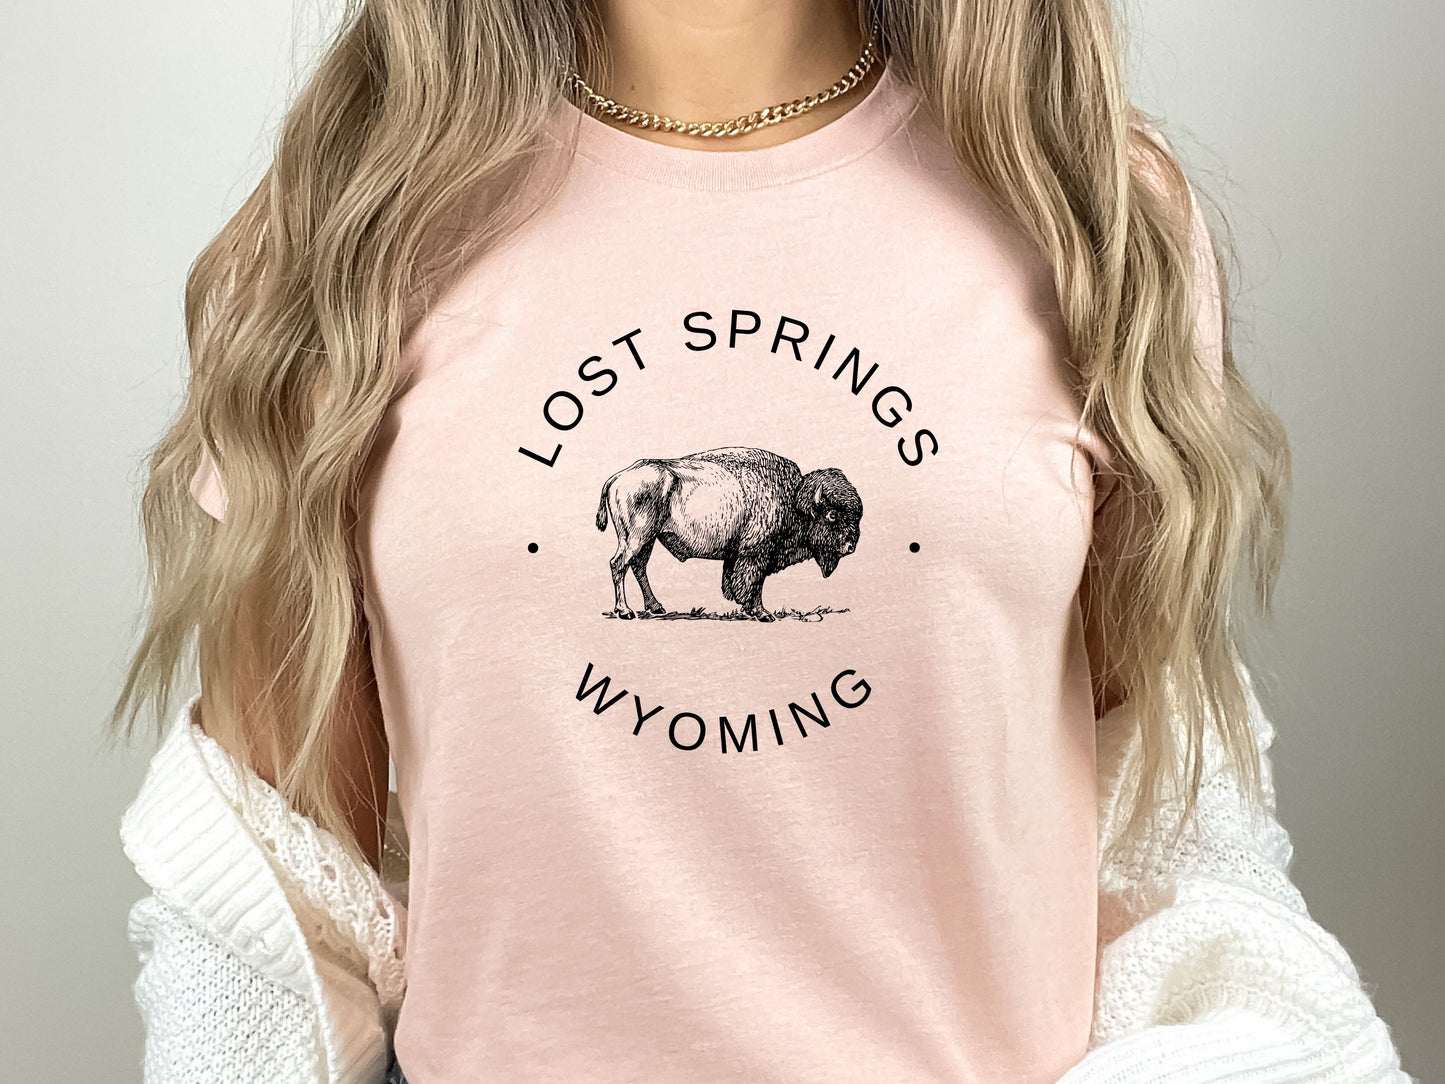 Lost Springs Women Wyoming T-Shirt